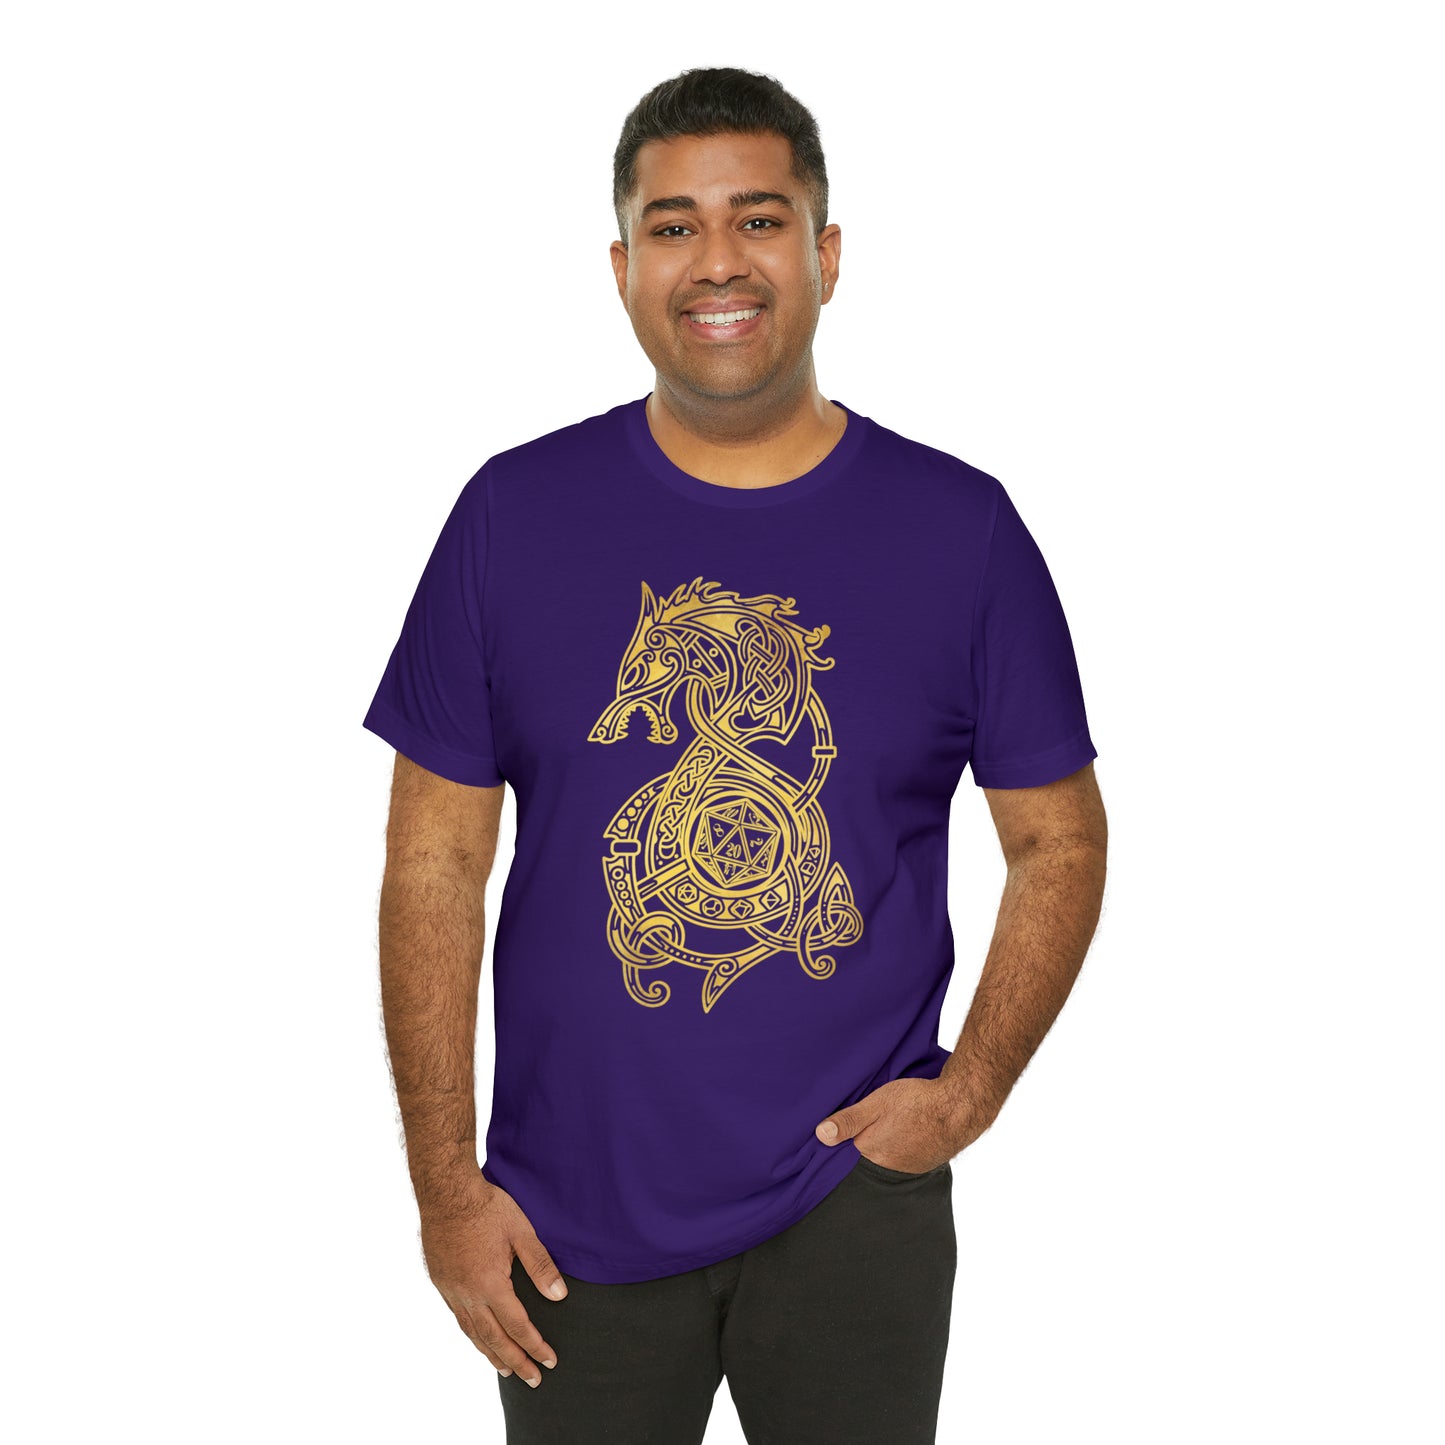 Golden Celtic Dice Dragon Shirt